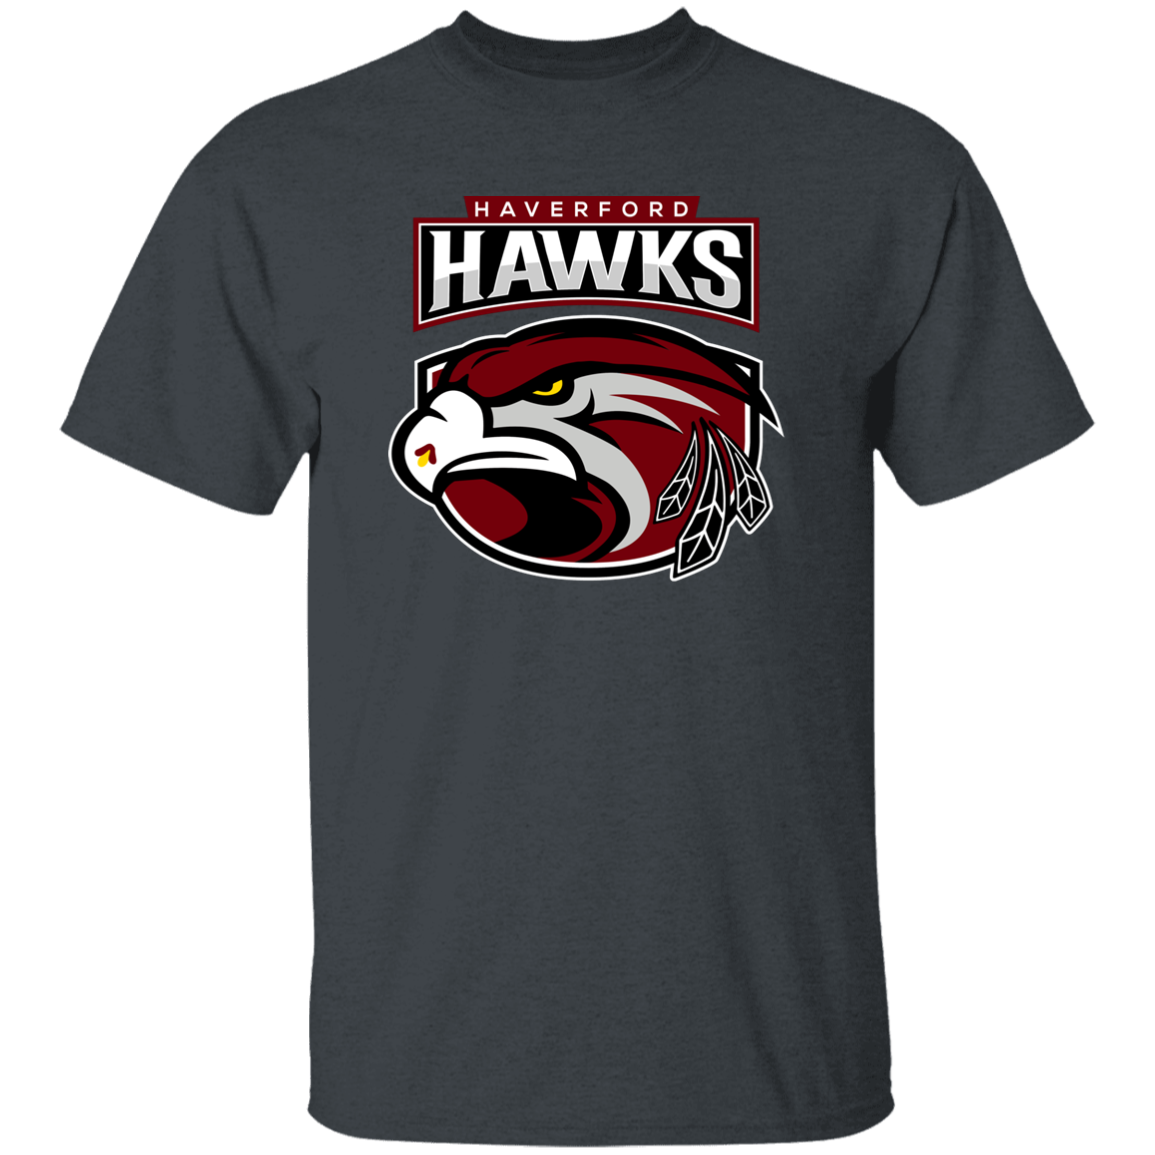 Hawks Youth 5.3 oz 100% Cotton T-Shirt